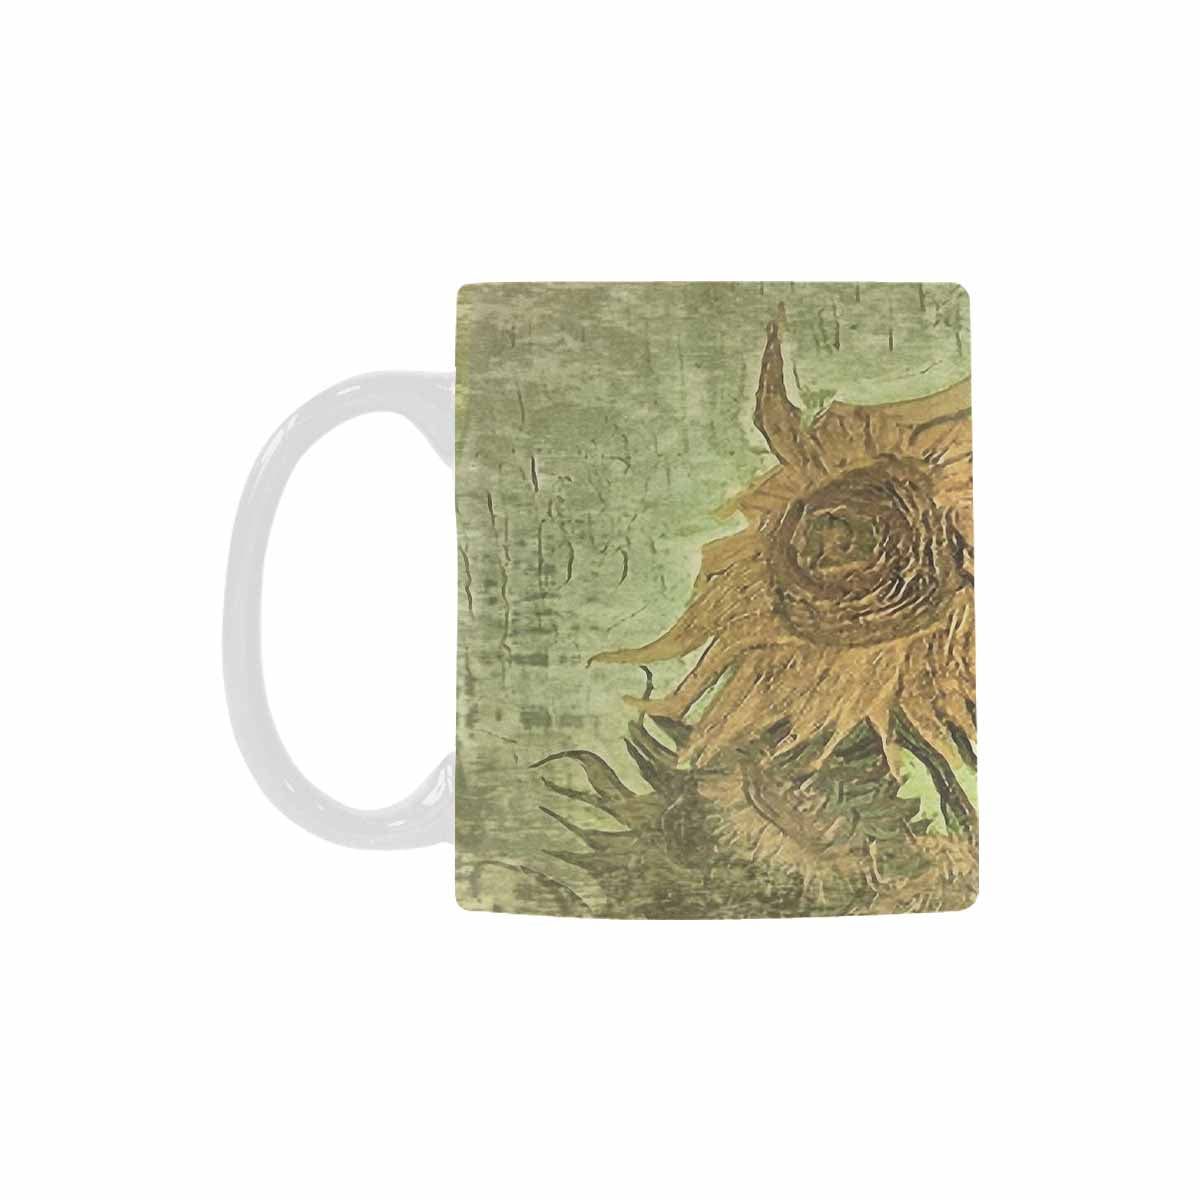 Vintage floral coffee mug or tea cup, Design 48x